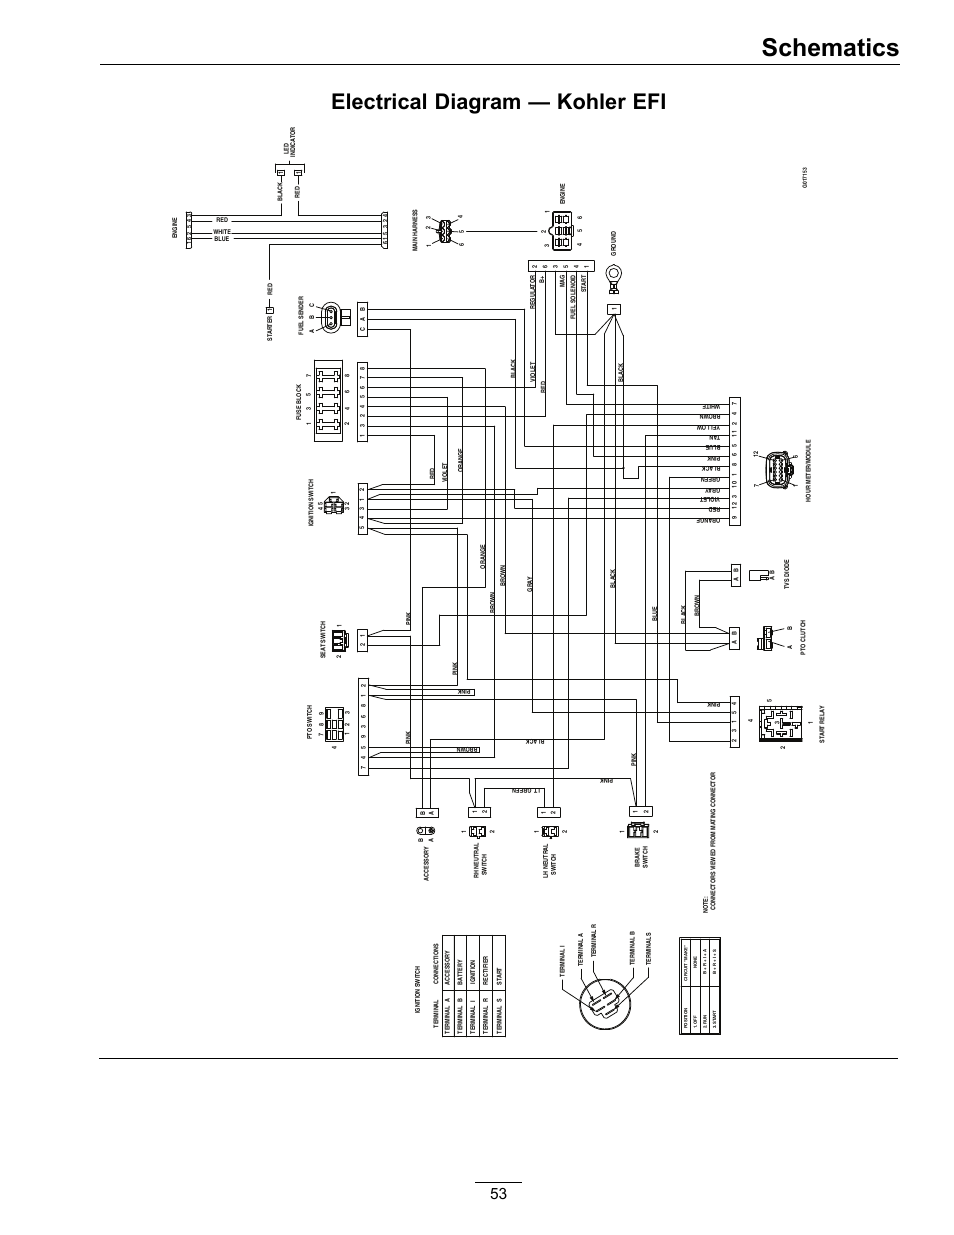 Schematics  Electrical Diagram  U2014 Kohler Efi